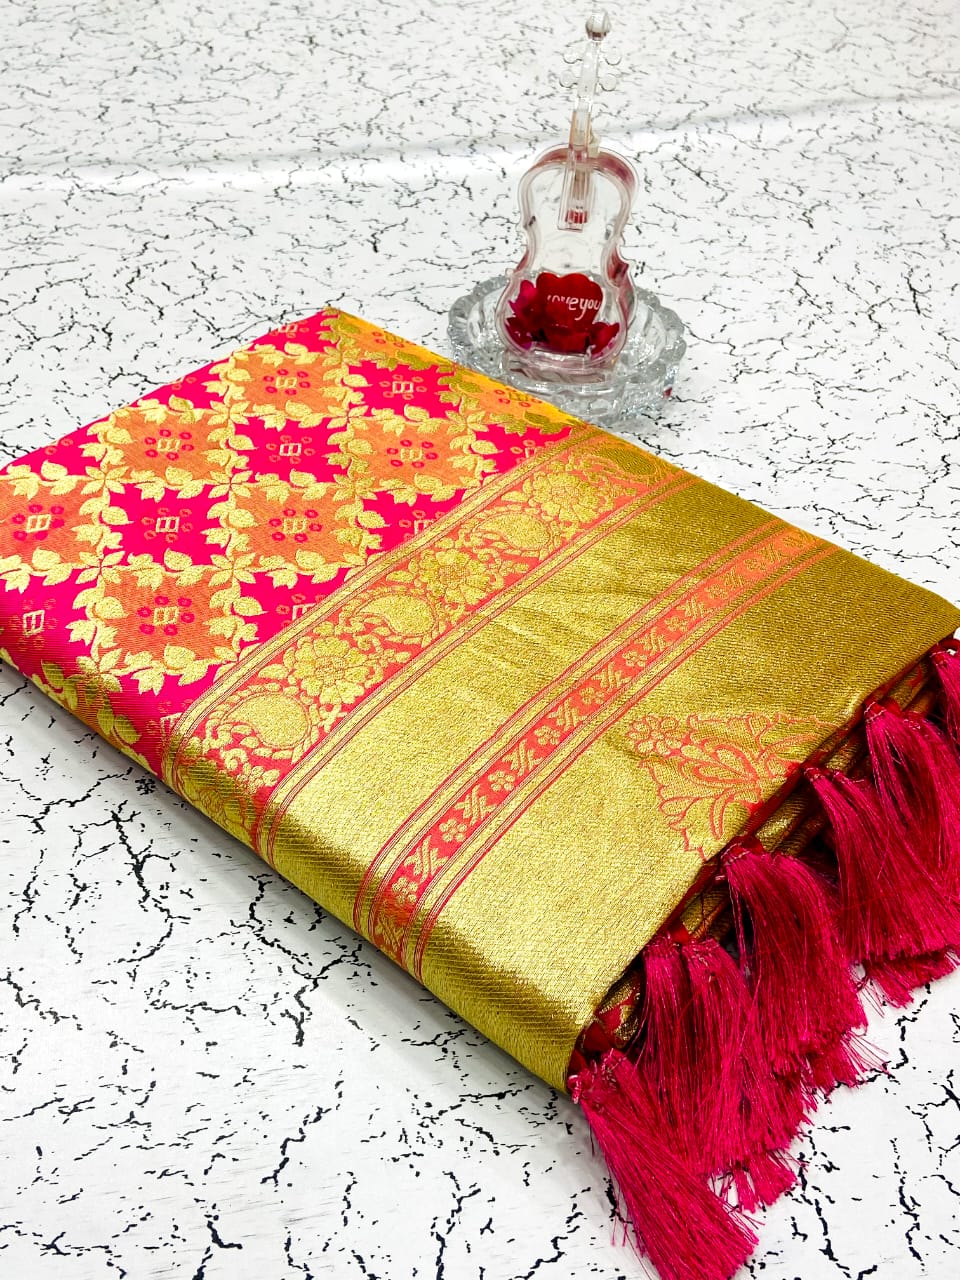 Heer fashion में आयी New saree design | Direct from manufacturers |  फैक्ट्री से डायरेक्ट होम डिलीवरी - YouTube